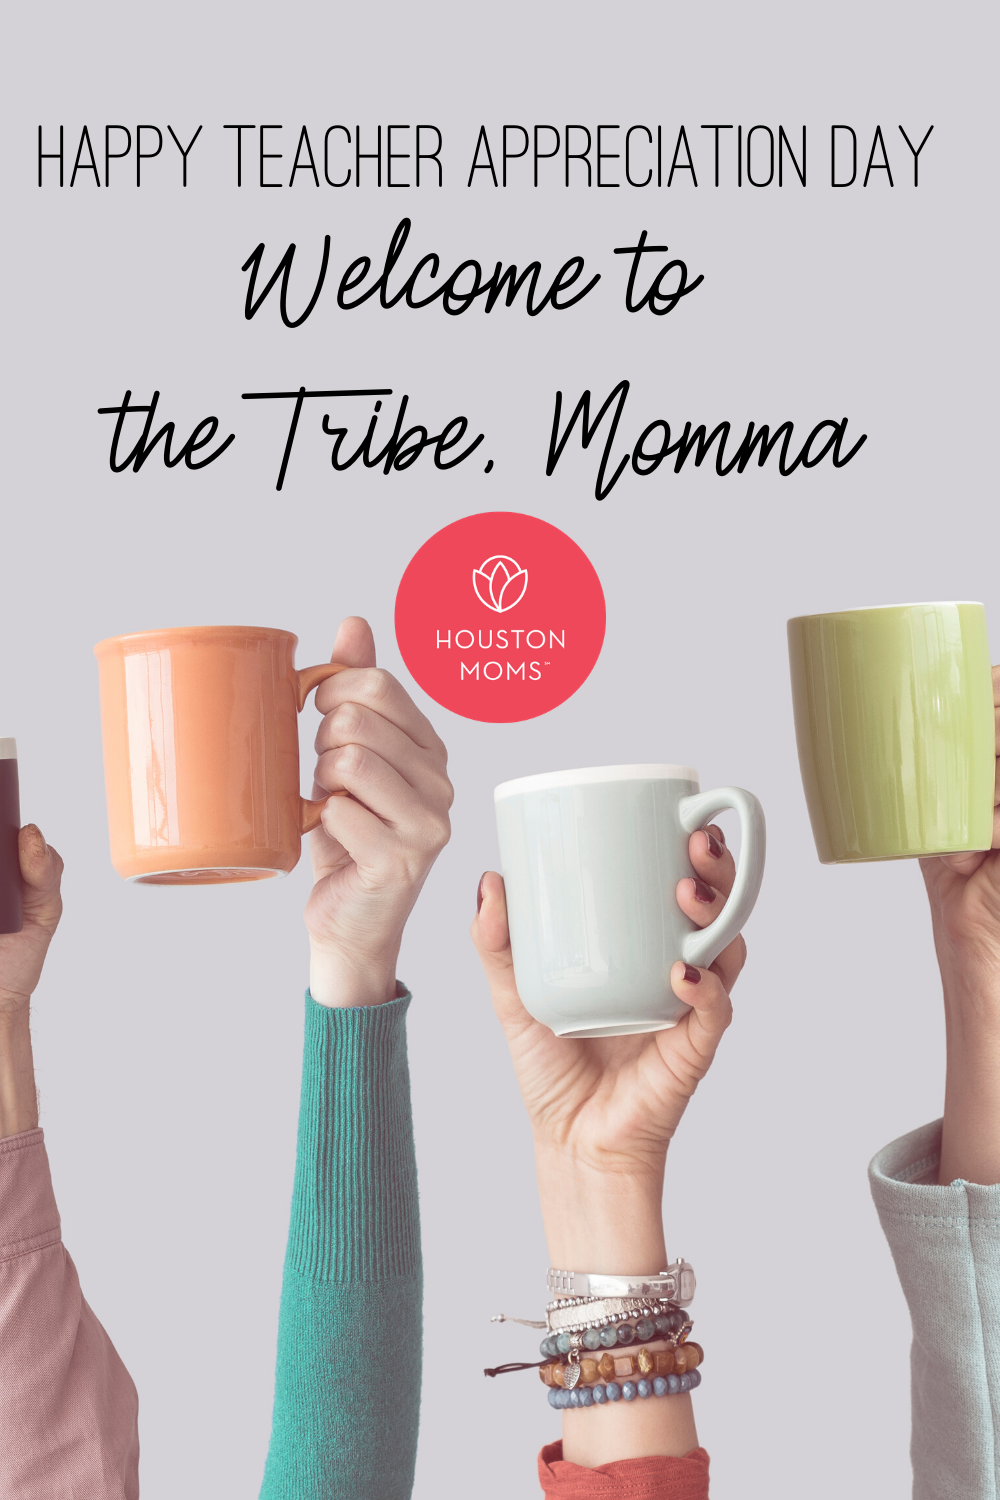 Houston Moms "Happy Teacher Appreciation Day:: Welcome to the Tribe, Momma!" #houstonmoms #houstonmomsblog #momsaroundhouston